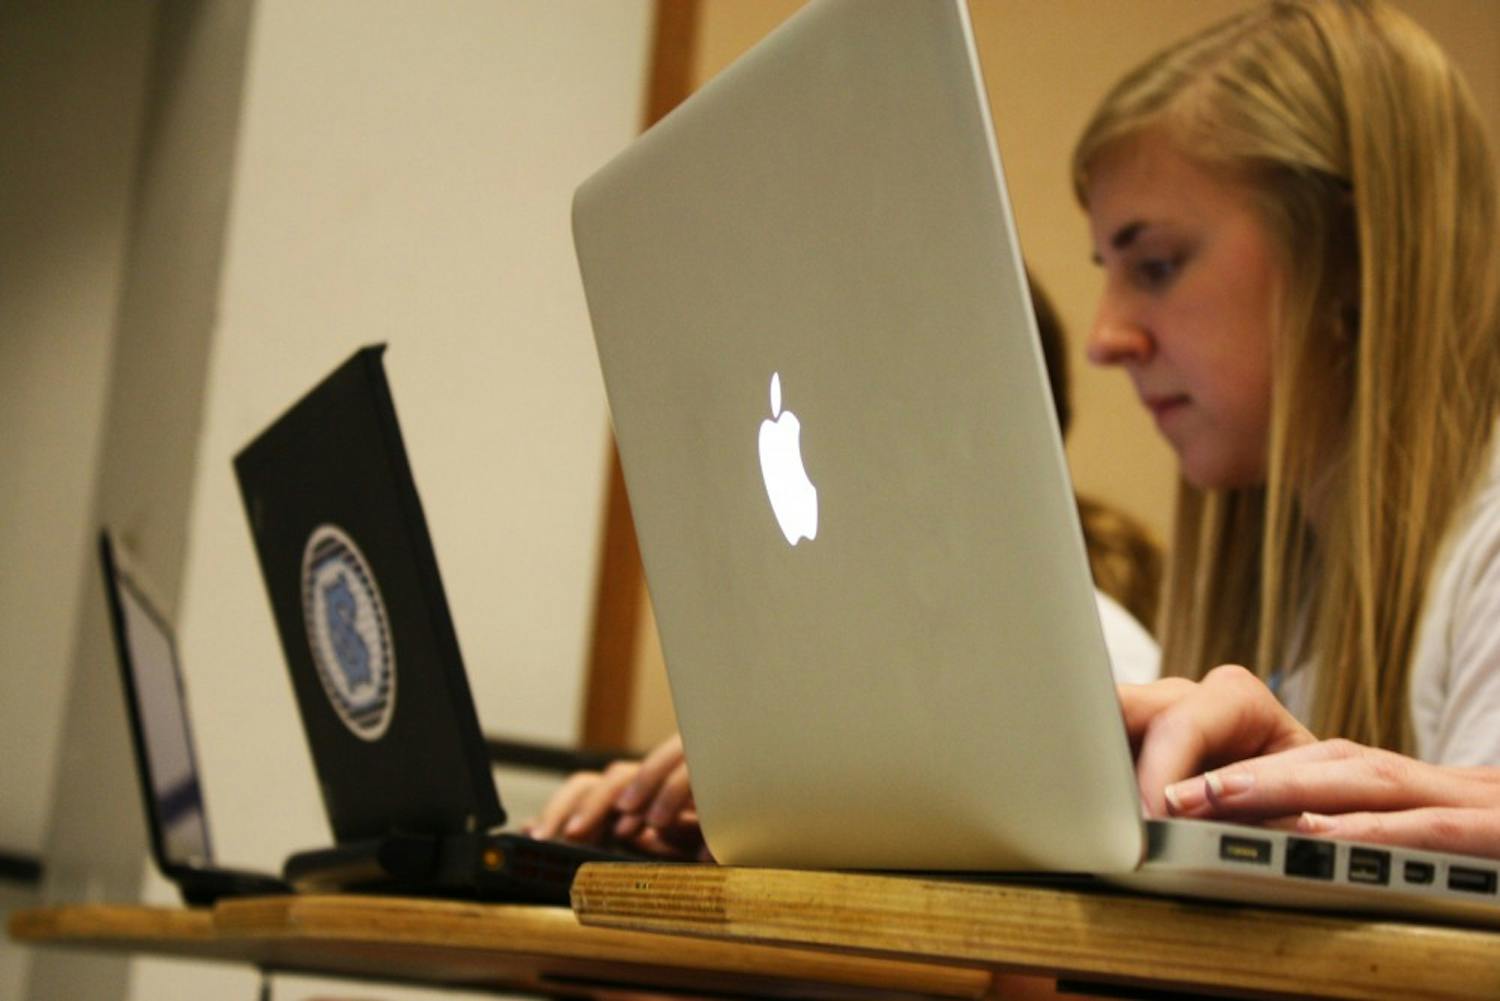 Photo: UNC’s Carolina Computing Initiative to offer Mac laptops (Bailey Seitter)